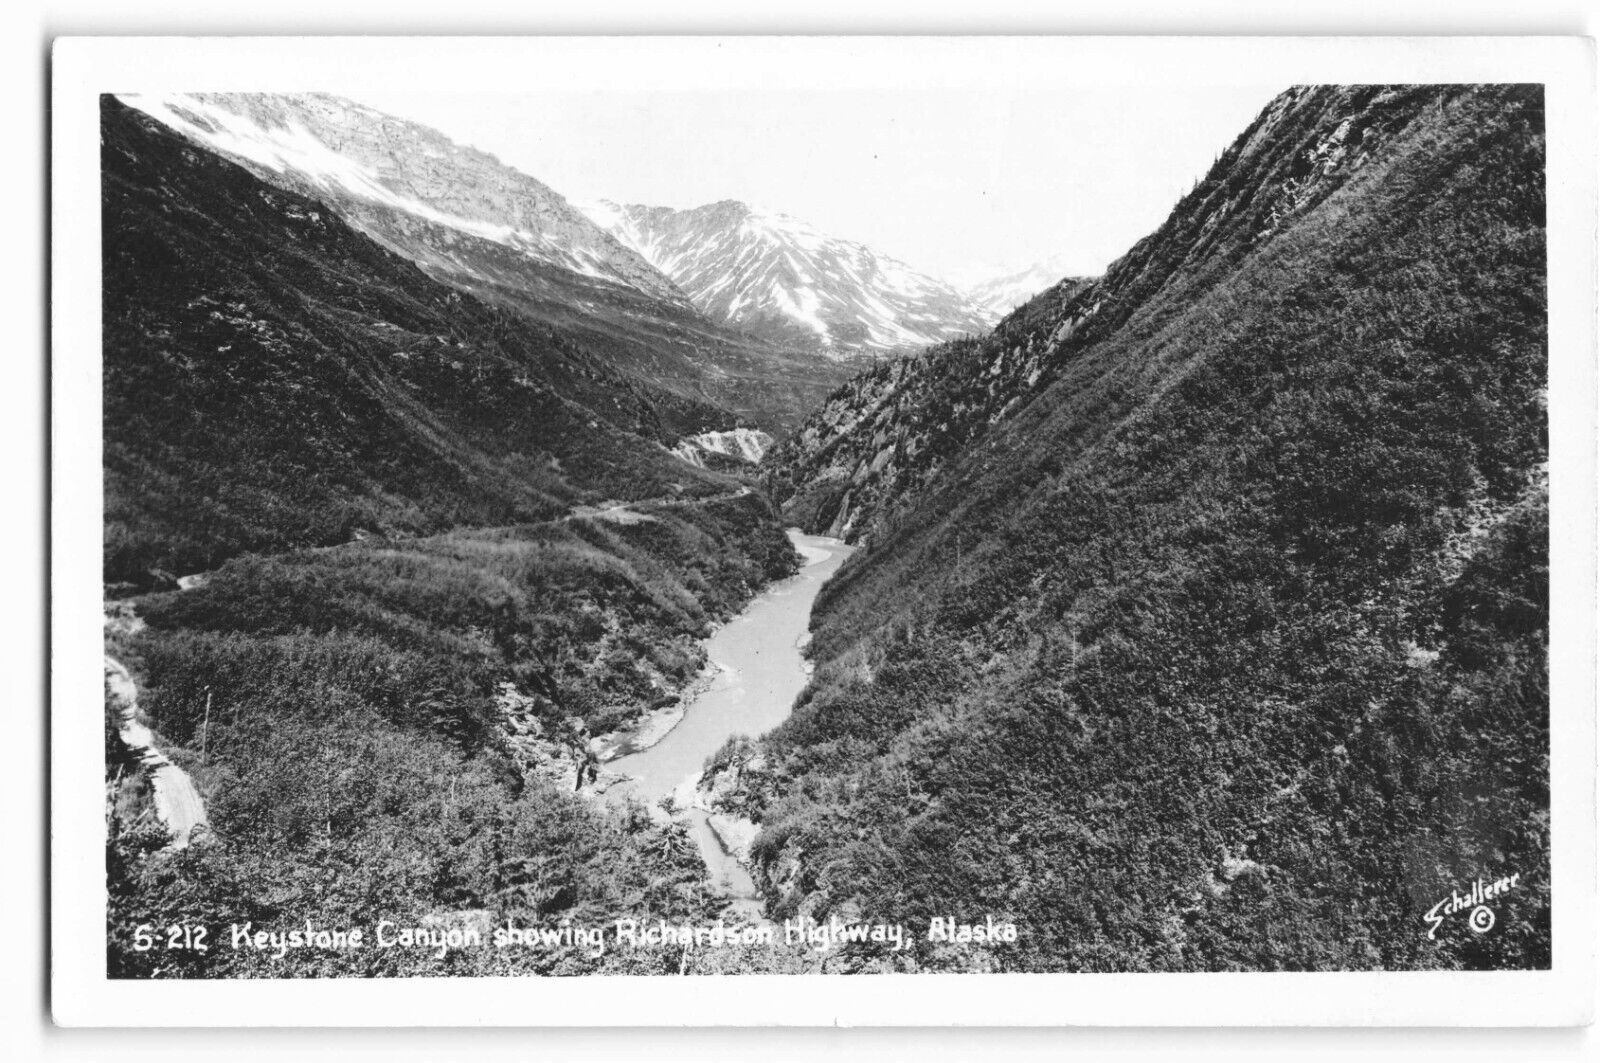 Postcard RPPC Keystone Canyon showing Richardson Highway, Alaska VTG FCP.